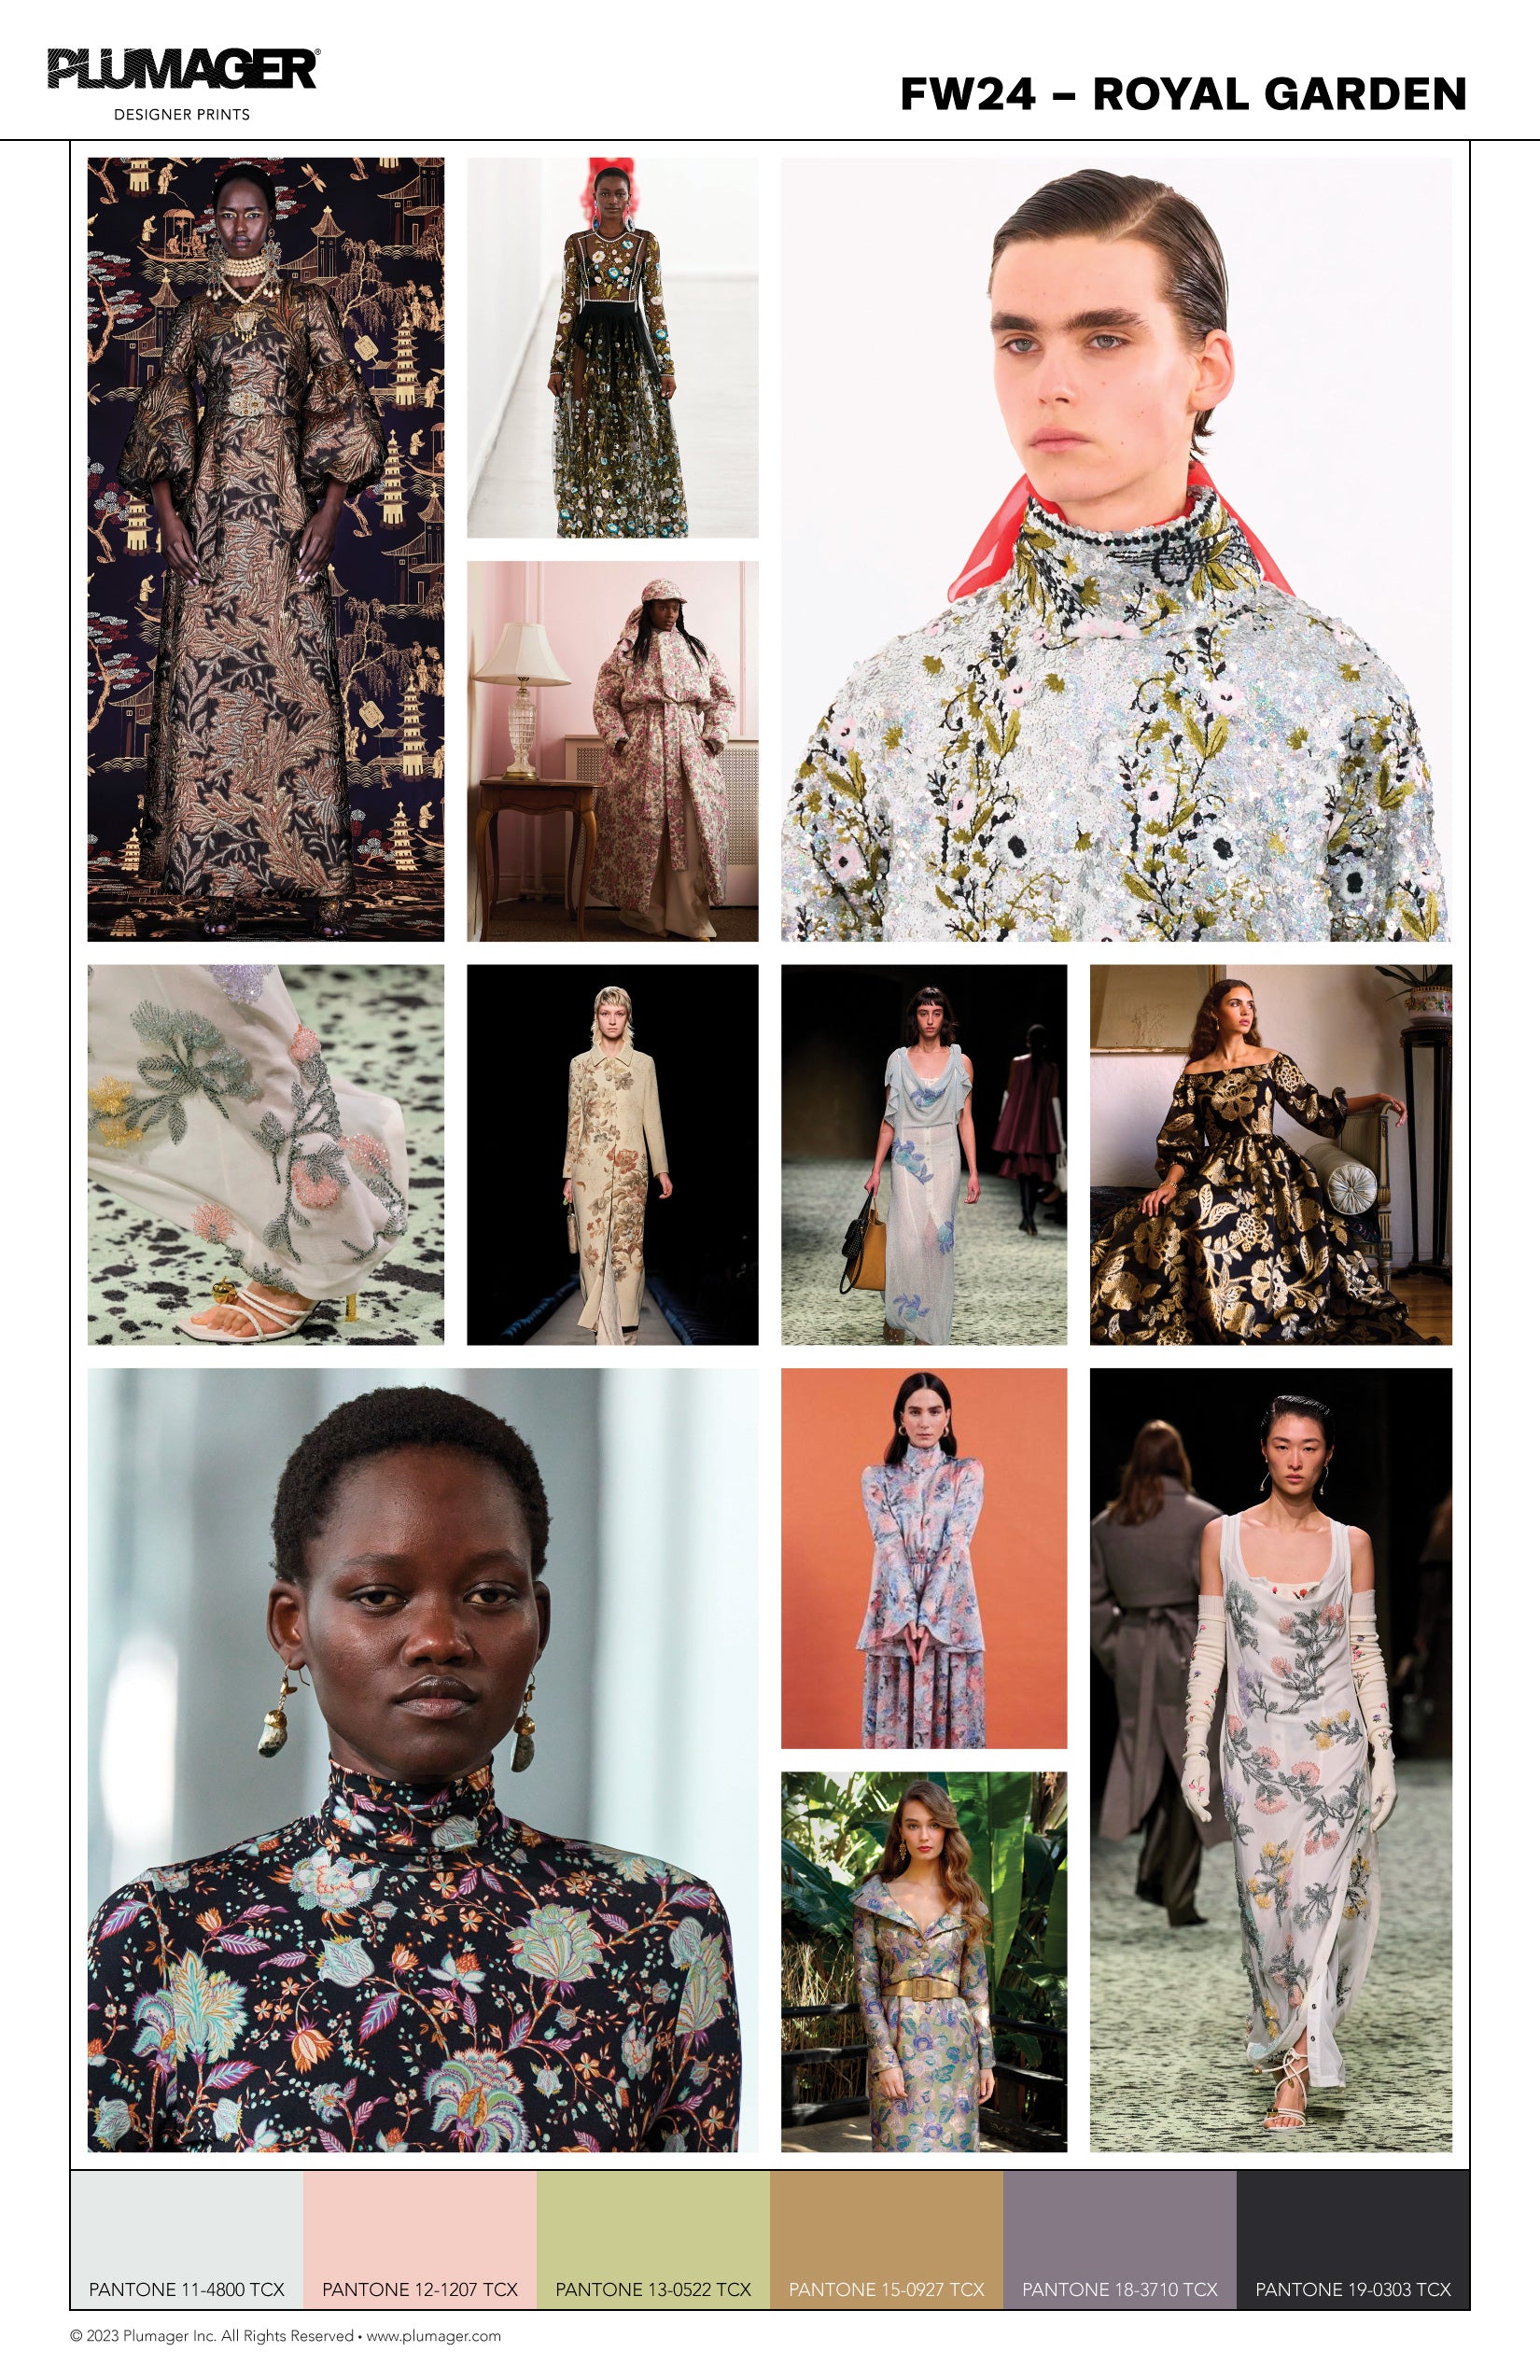 FW24 Print Textile Color Trend Report - Royal Garden